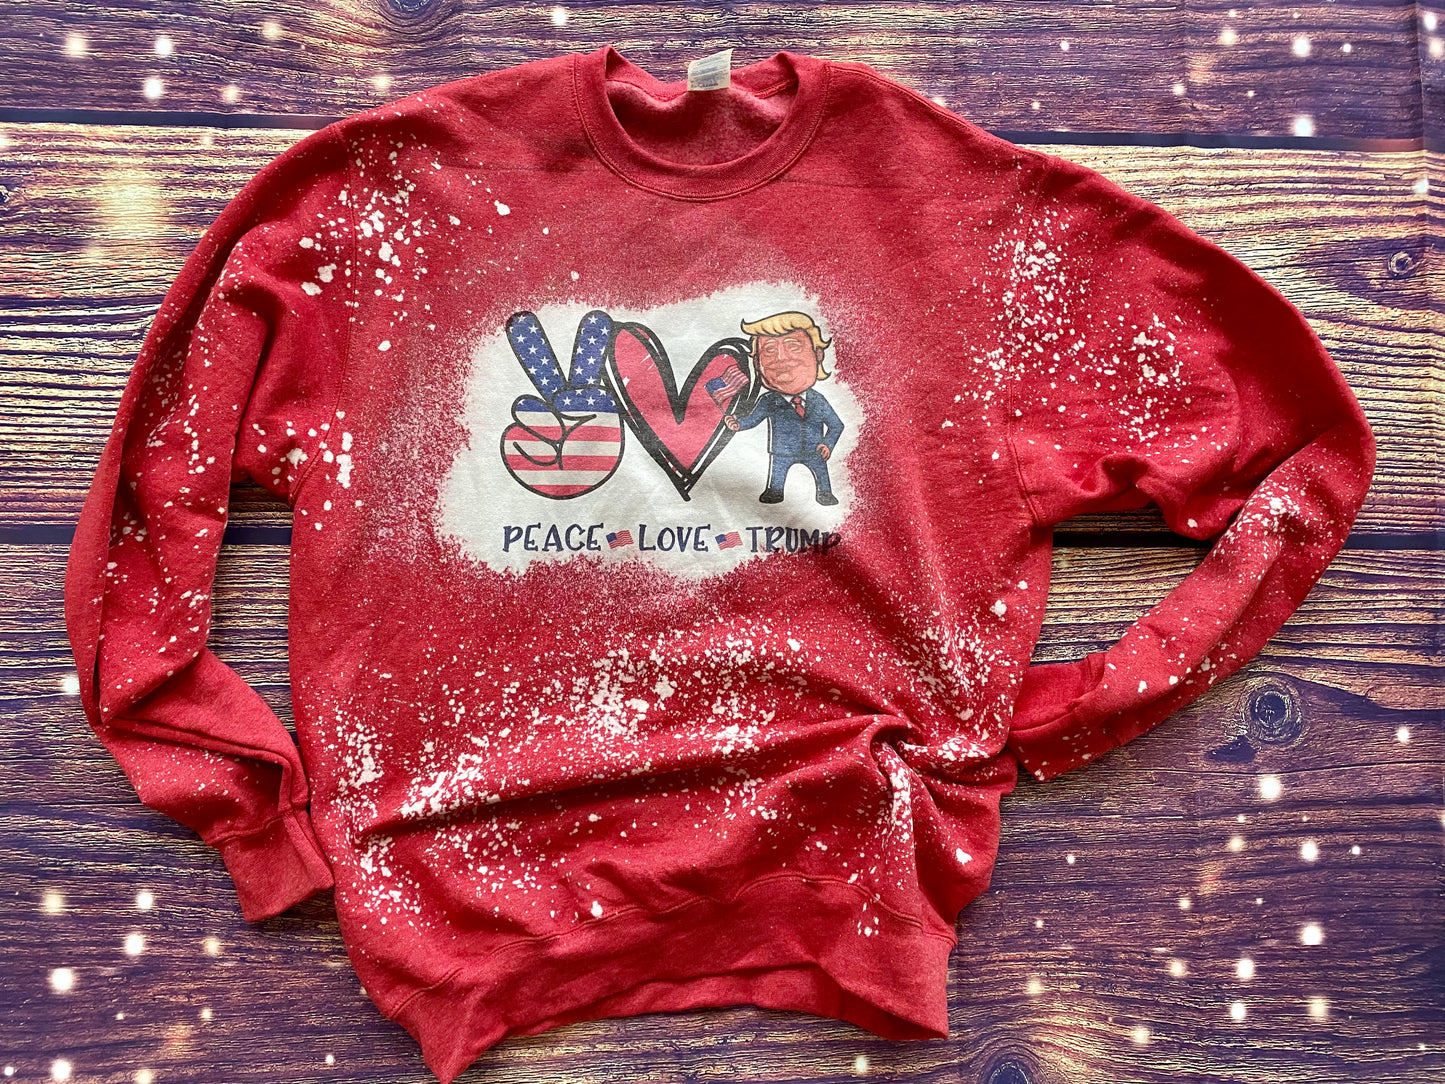 Peace Love Trump Bleach Sweatshirt